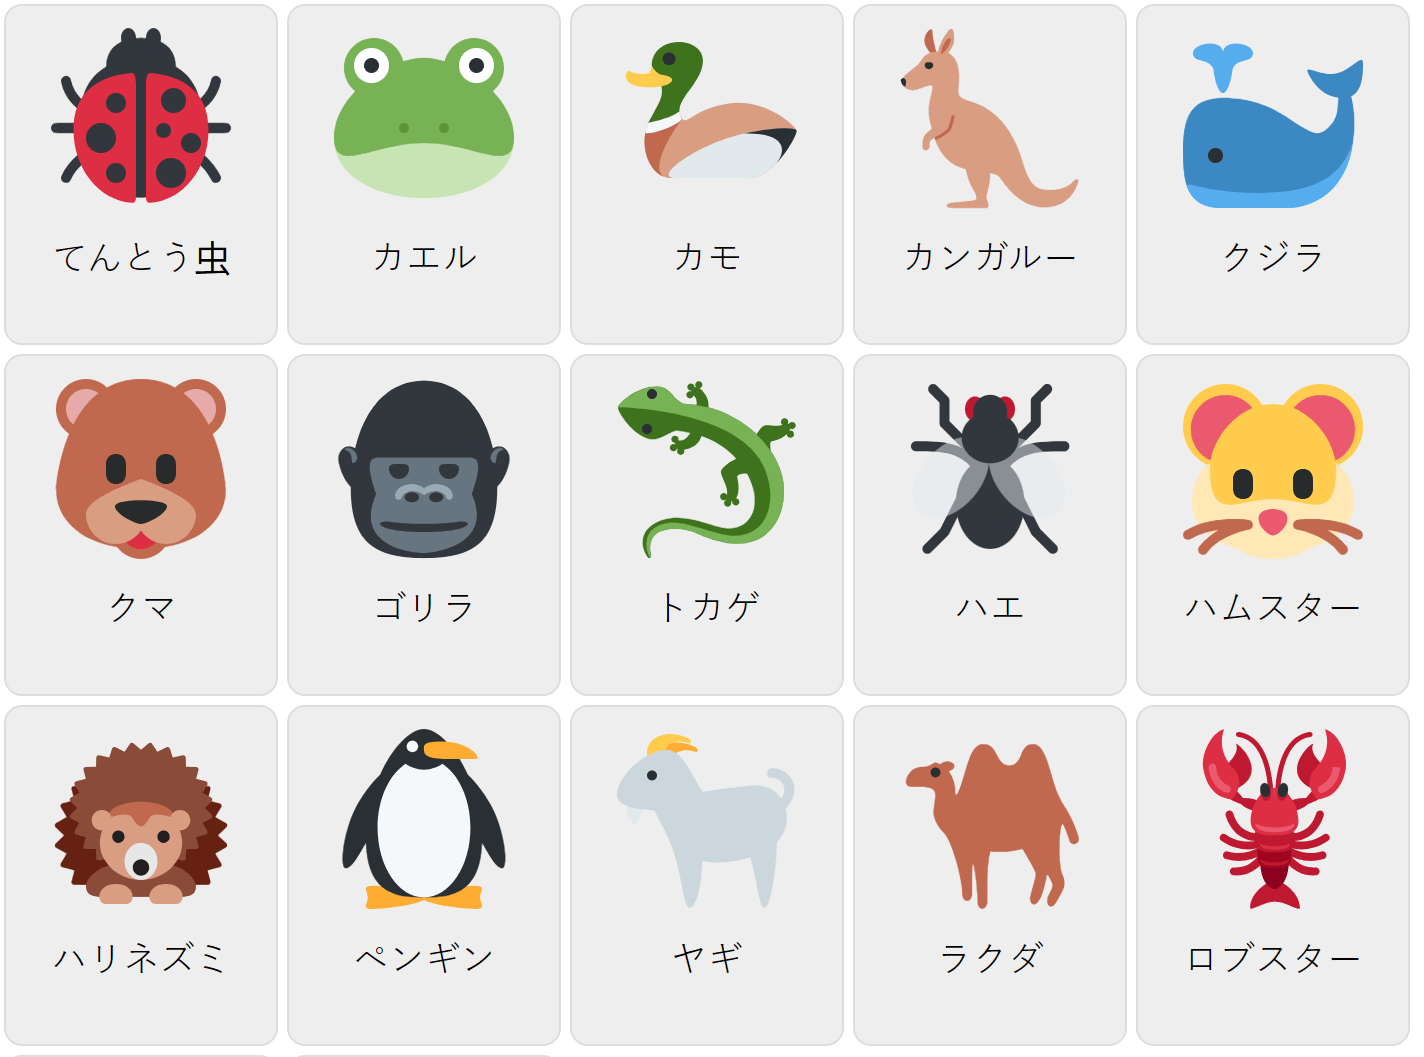 Animales en japonés 2